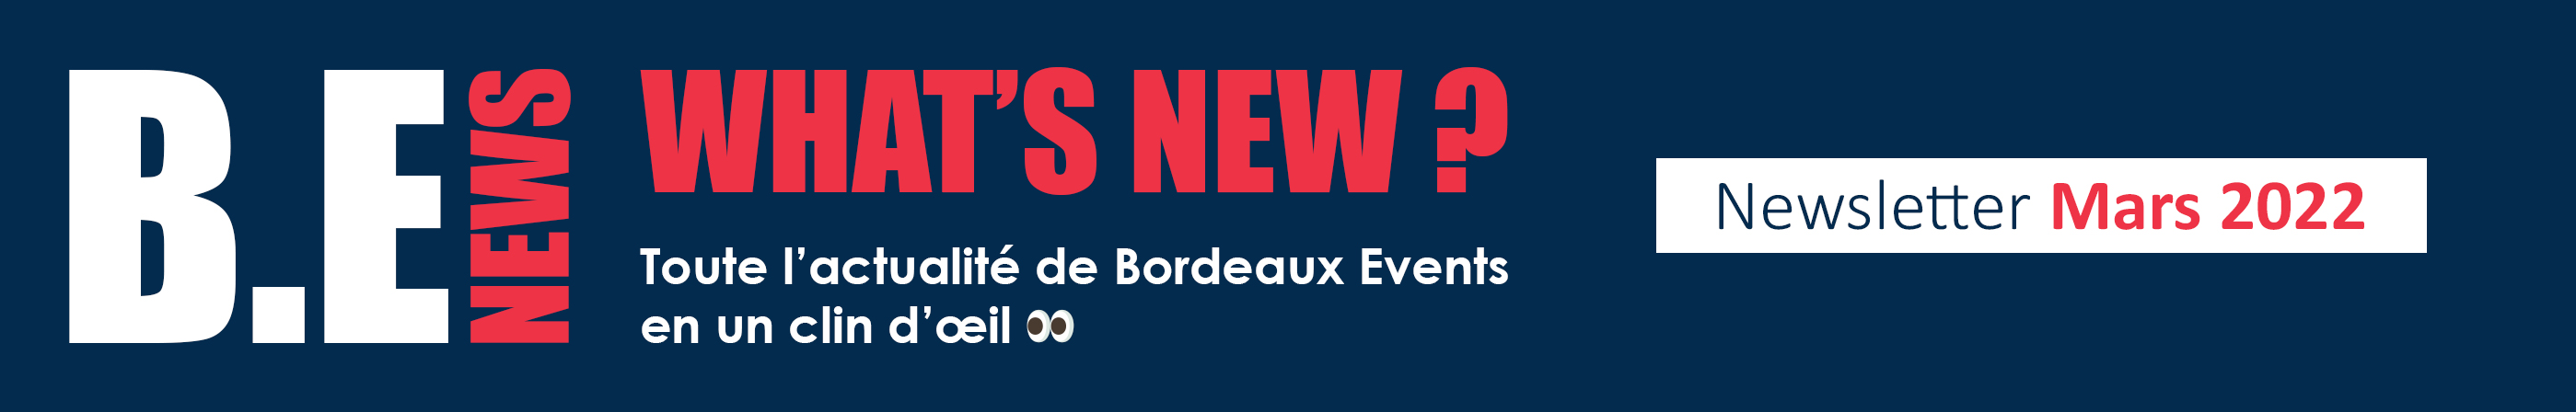 Header Bordeaux Events - News